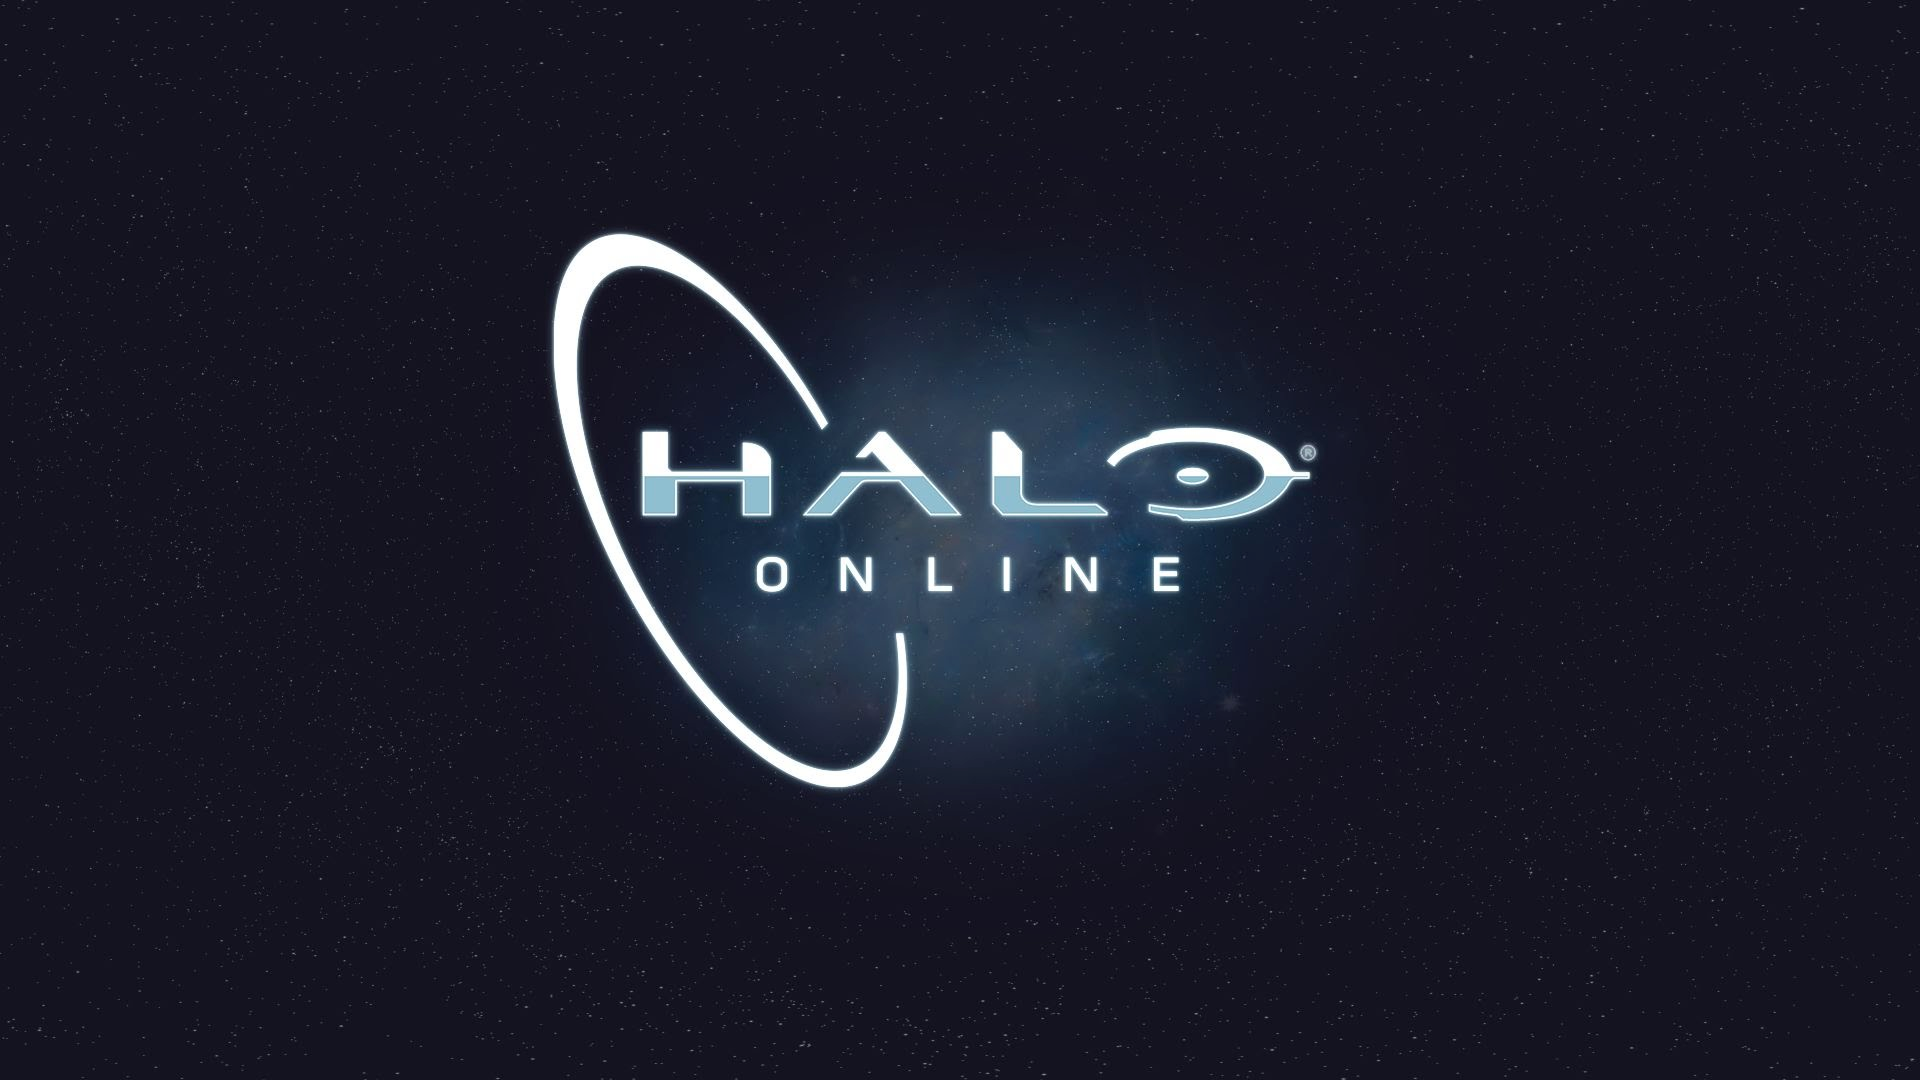 Halo Online screen.